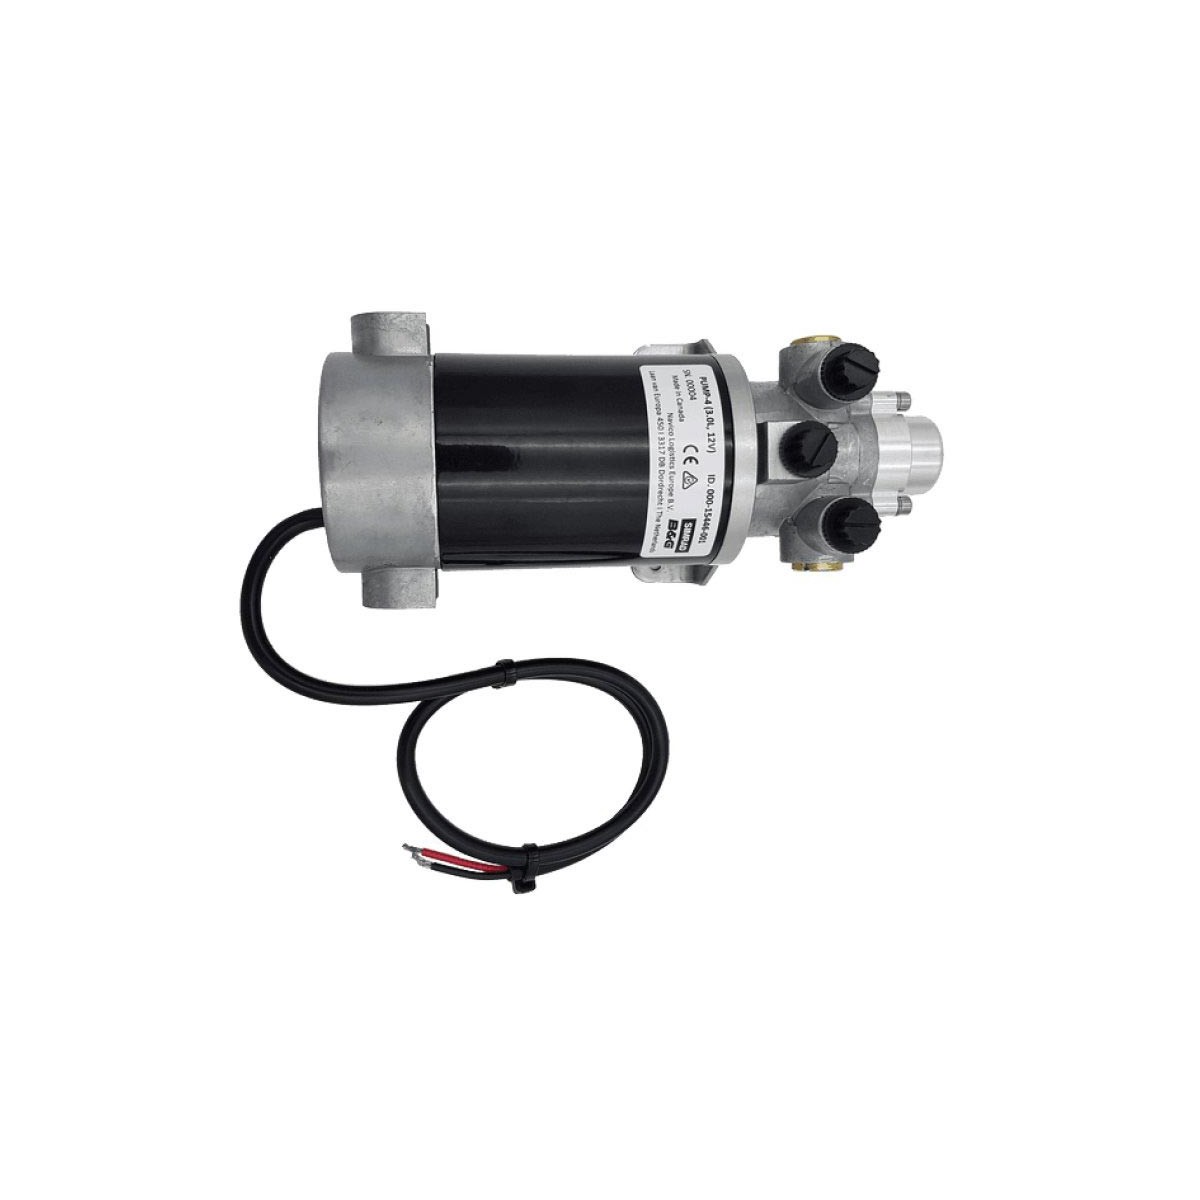 Simrad Pompe Hydraulique Pump 12/24V 3.0L 000-15446-002 - Comptoir Nautique